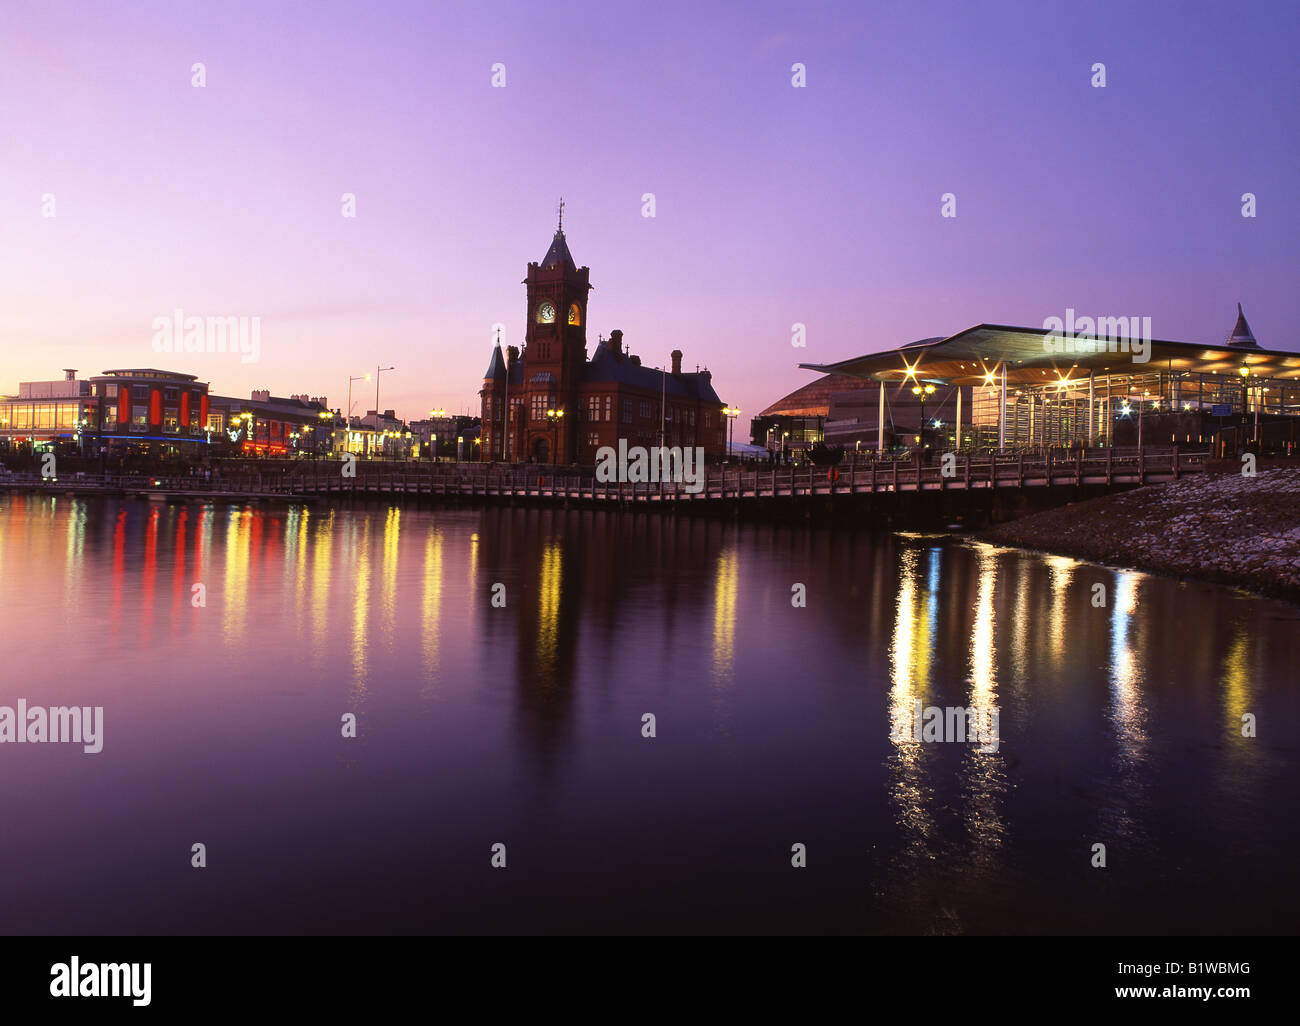 Senedd Welsh Assembly Building "und" Pierhead Cardiff Bay Twilight / Nacht Ansicht Cardiff South Wales UK Stockfoto